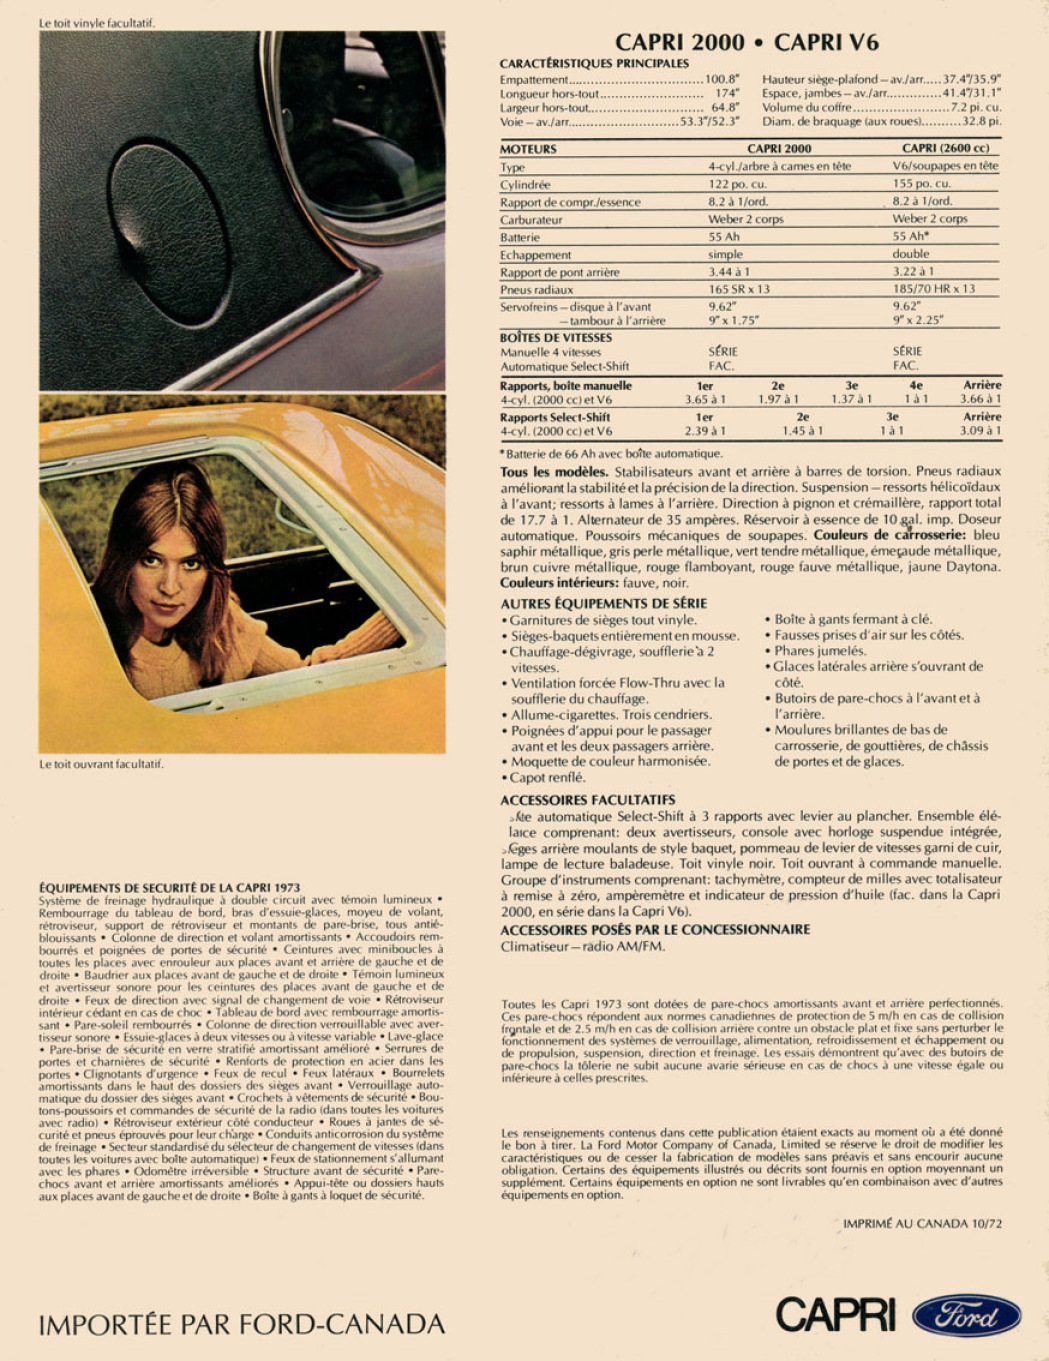 n_1973 Ford Capri (Cdn-Fr)-12.jpg